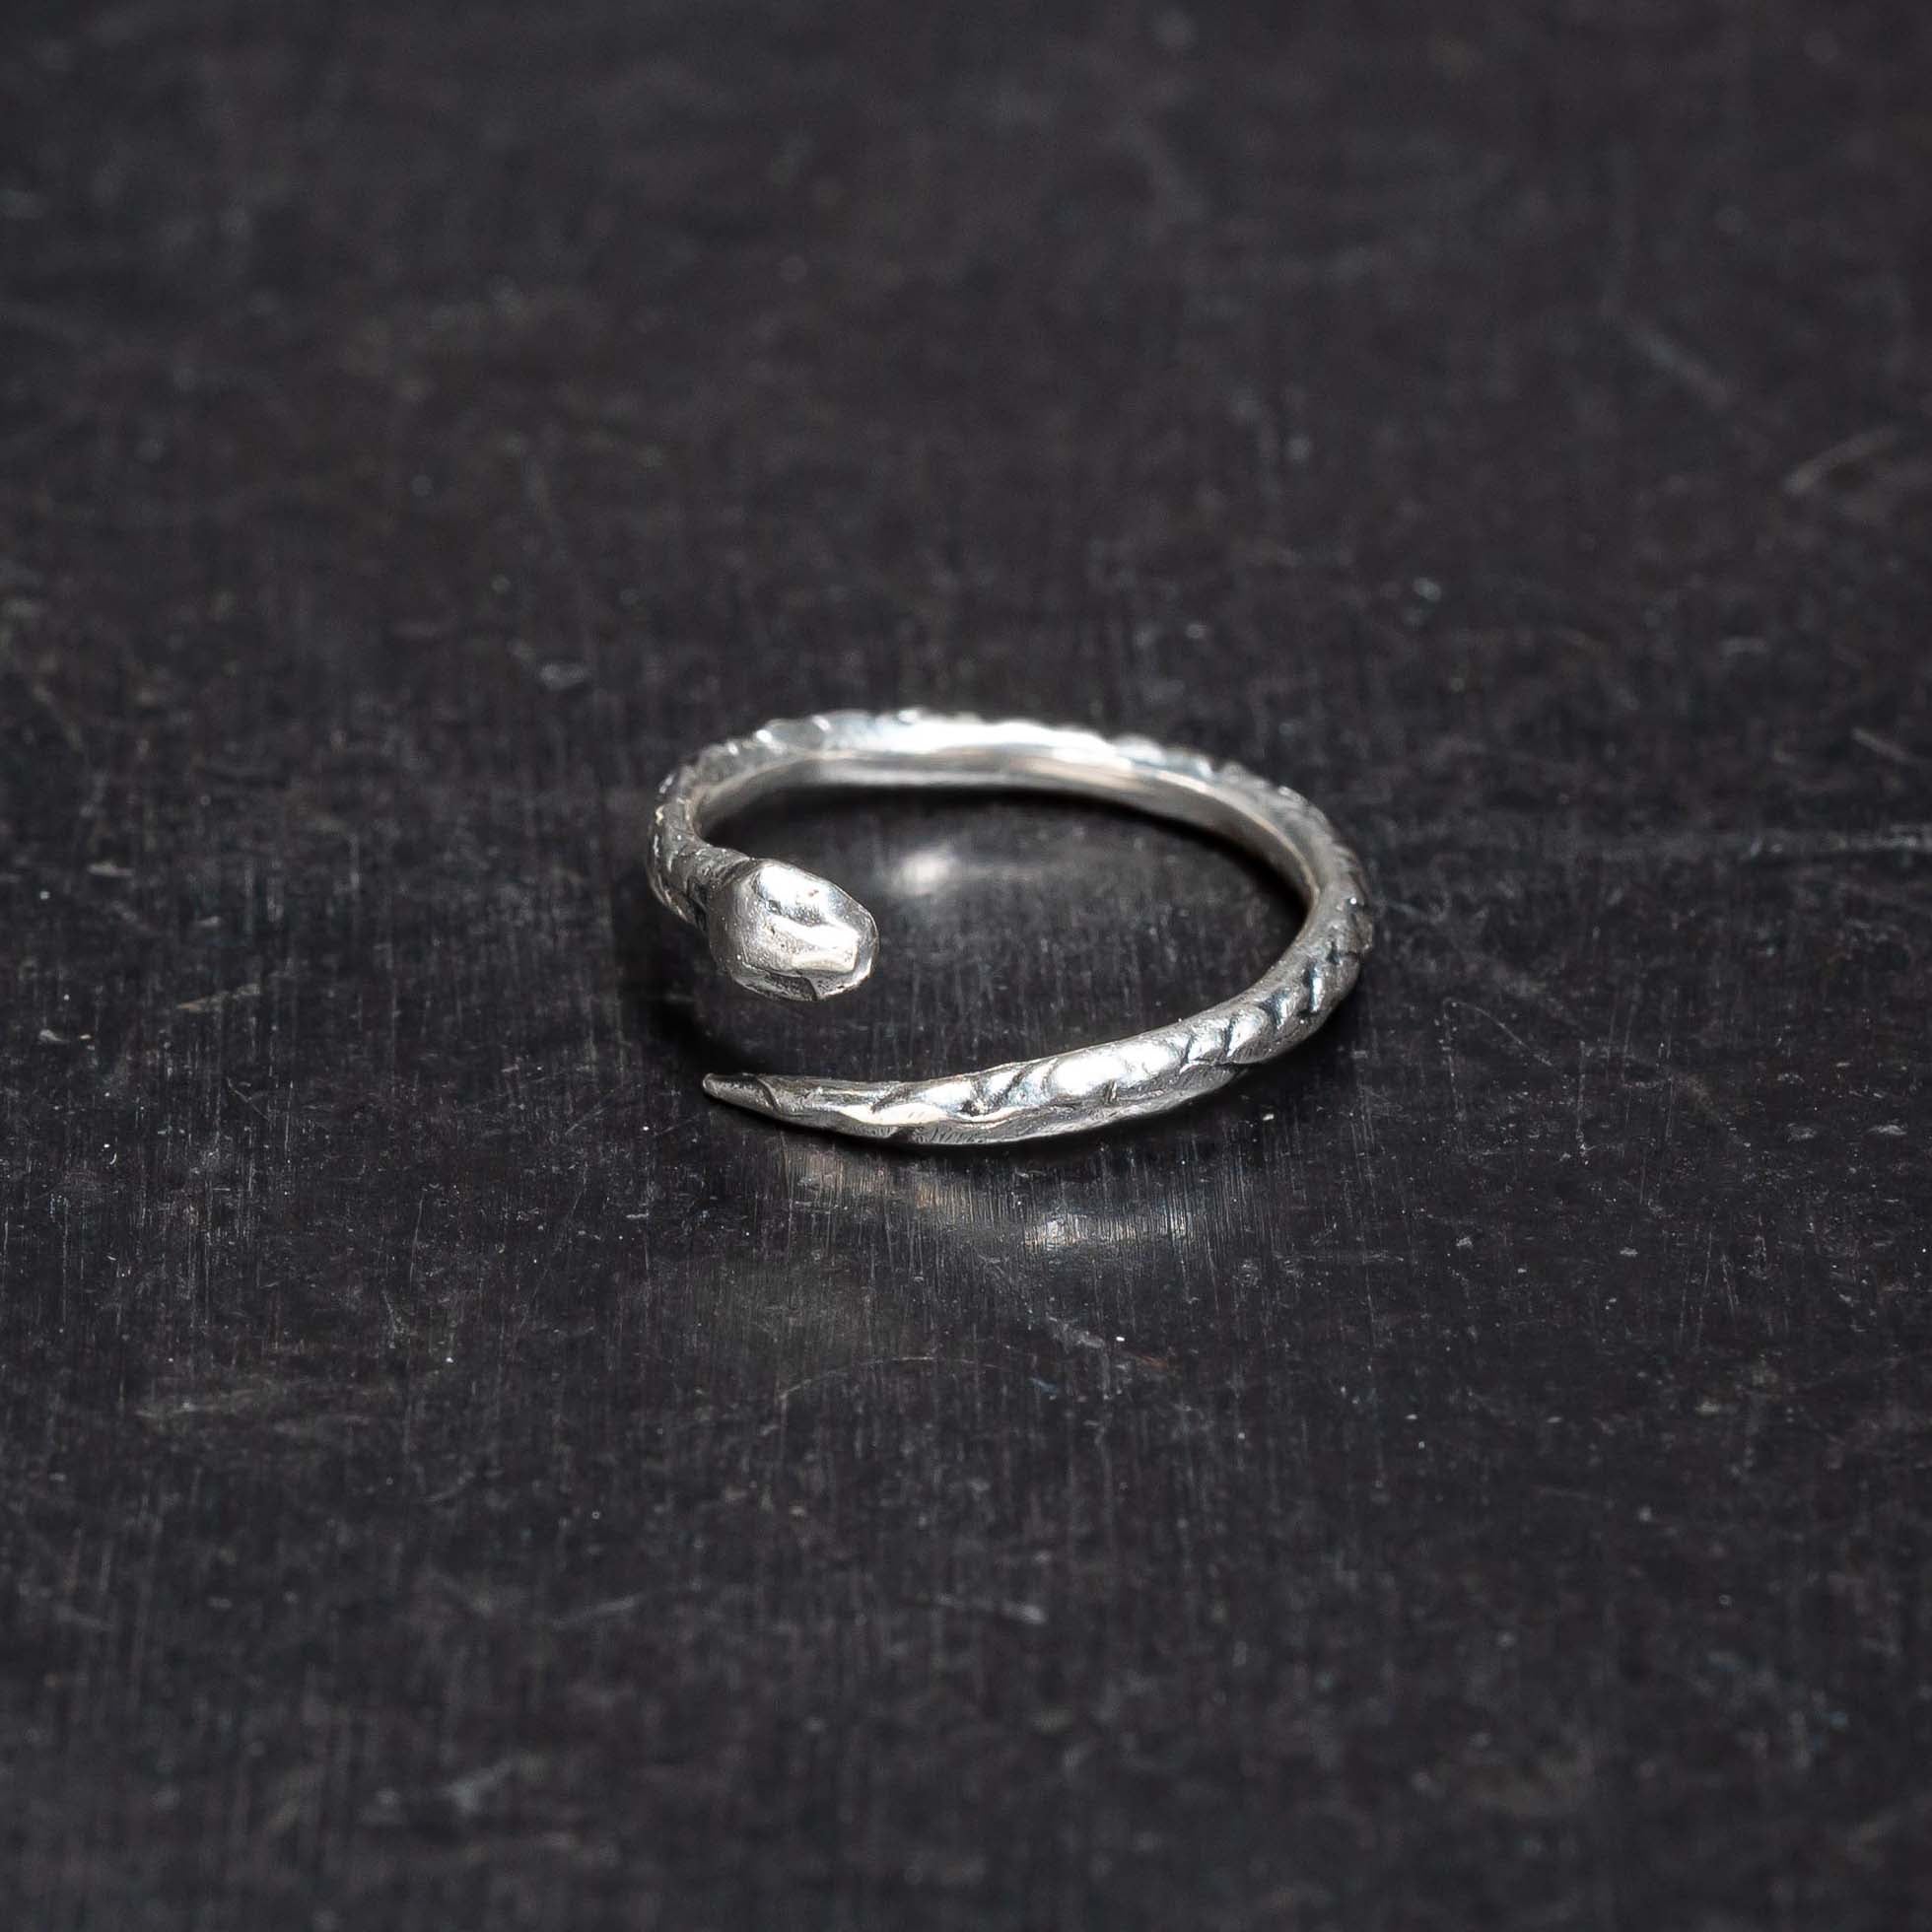 sterling silver snake ring